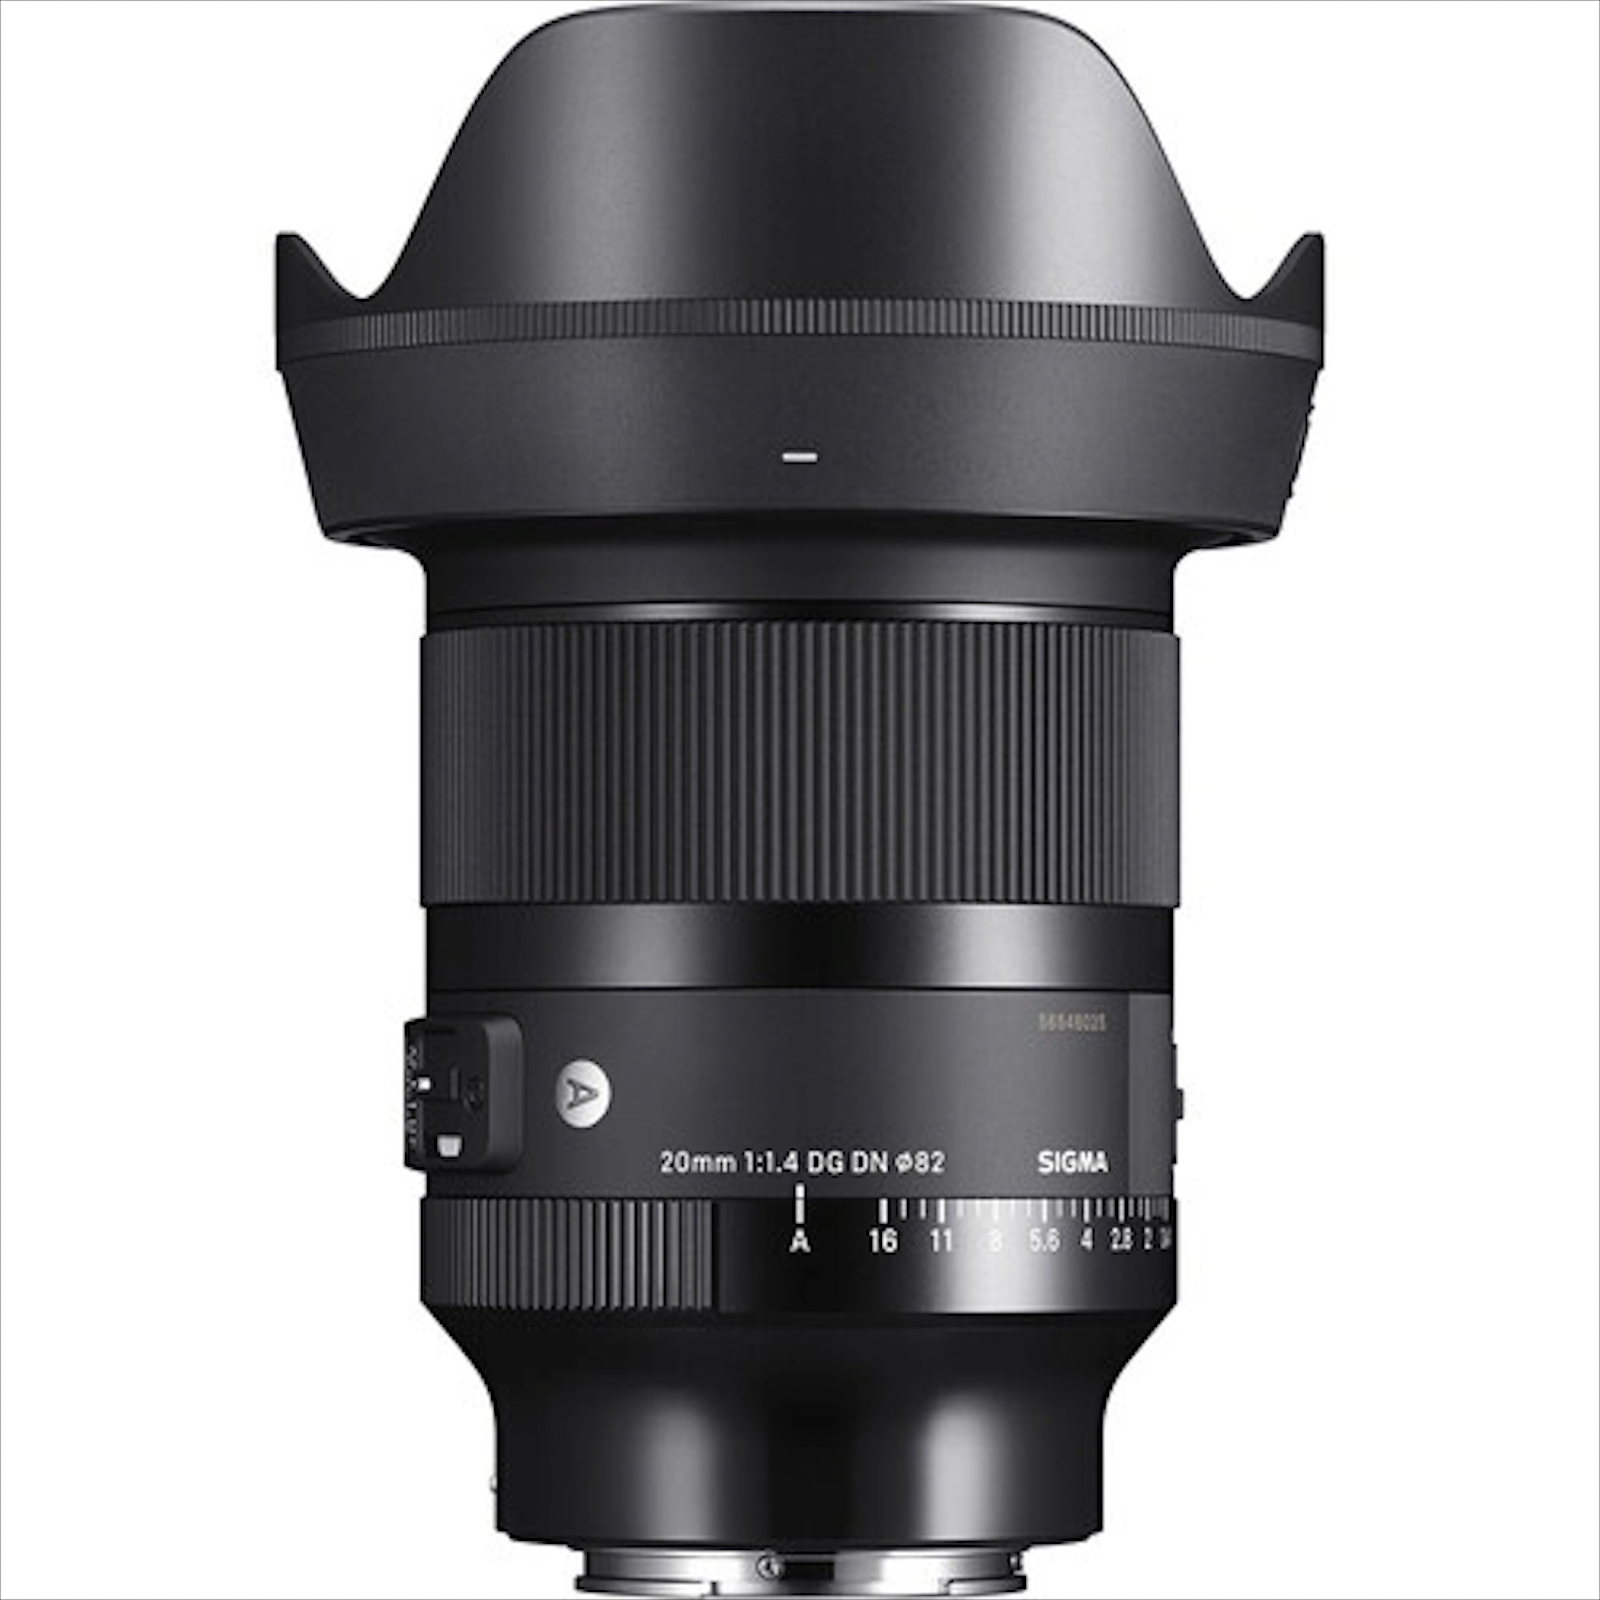 Sigma 20mm f/1.4 DG DN Art Lens for Sony E Sigma Lens - Mirrorless Fixed Focal Length